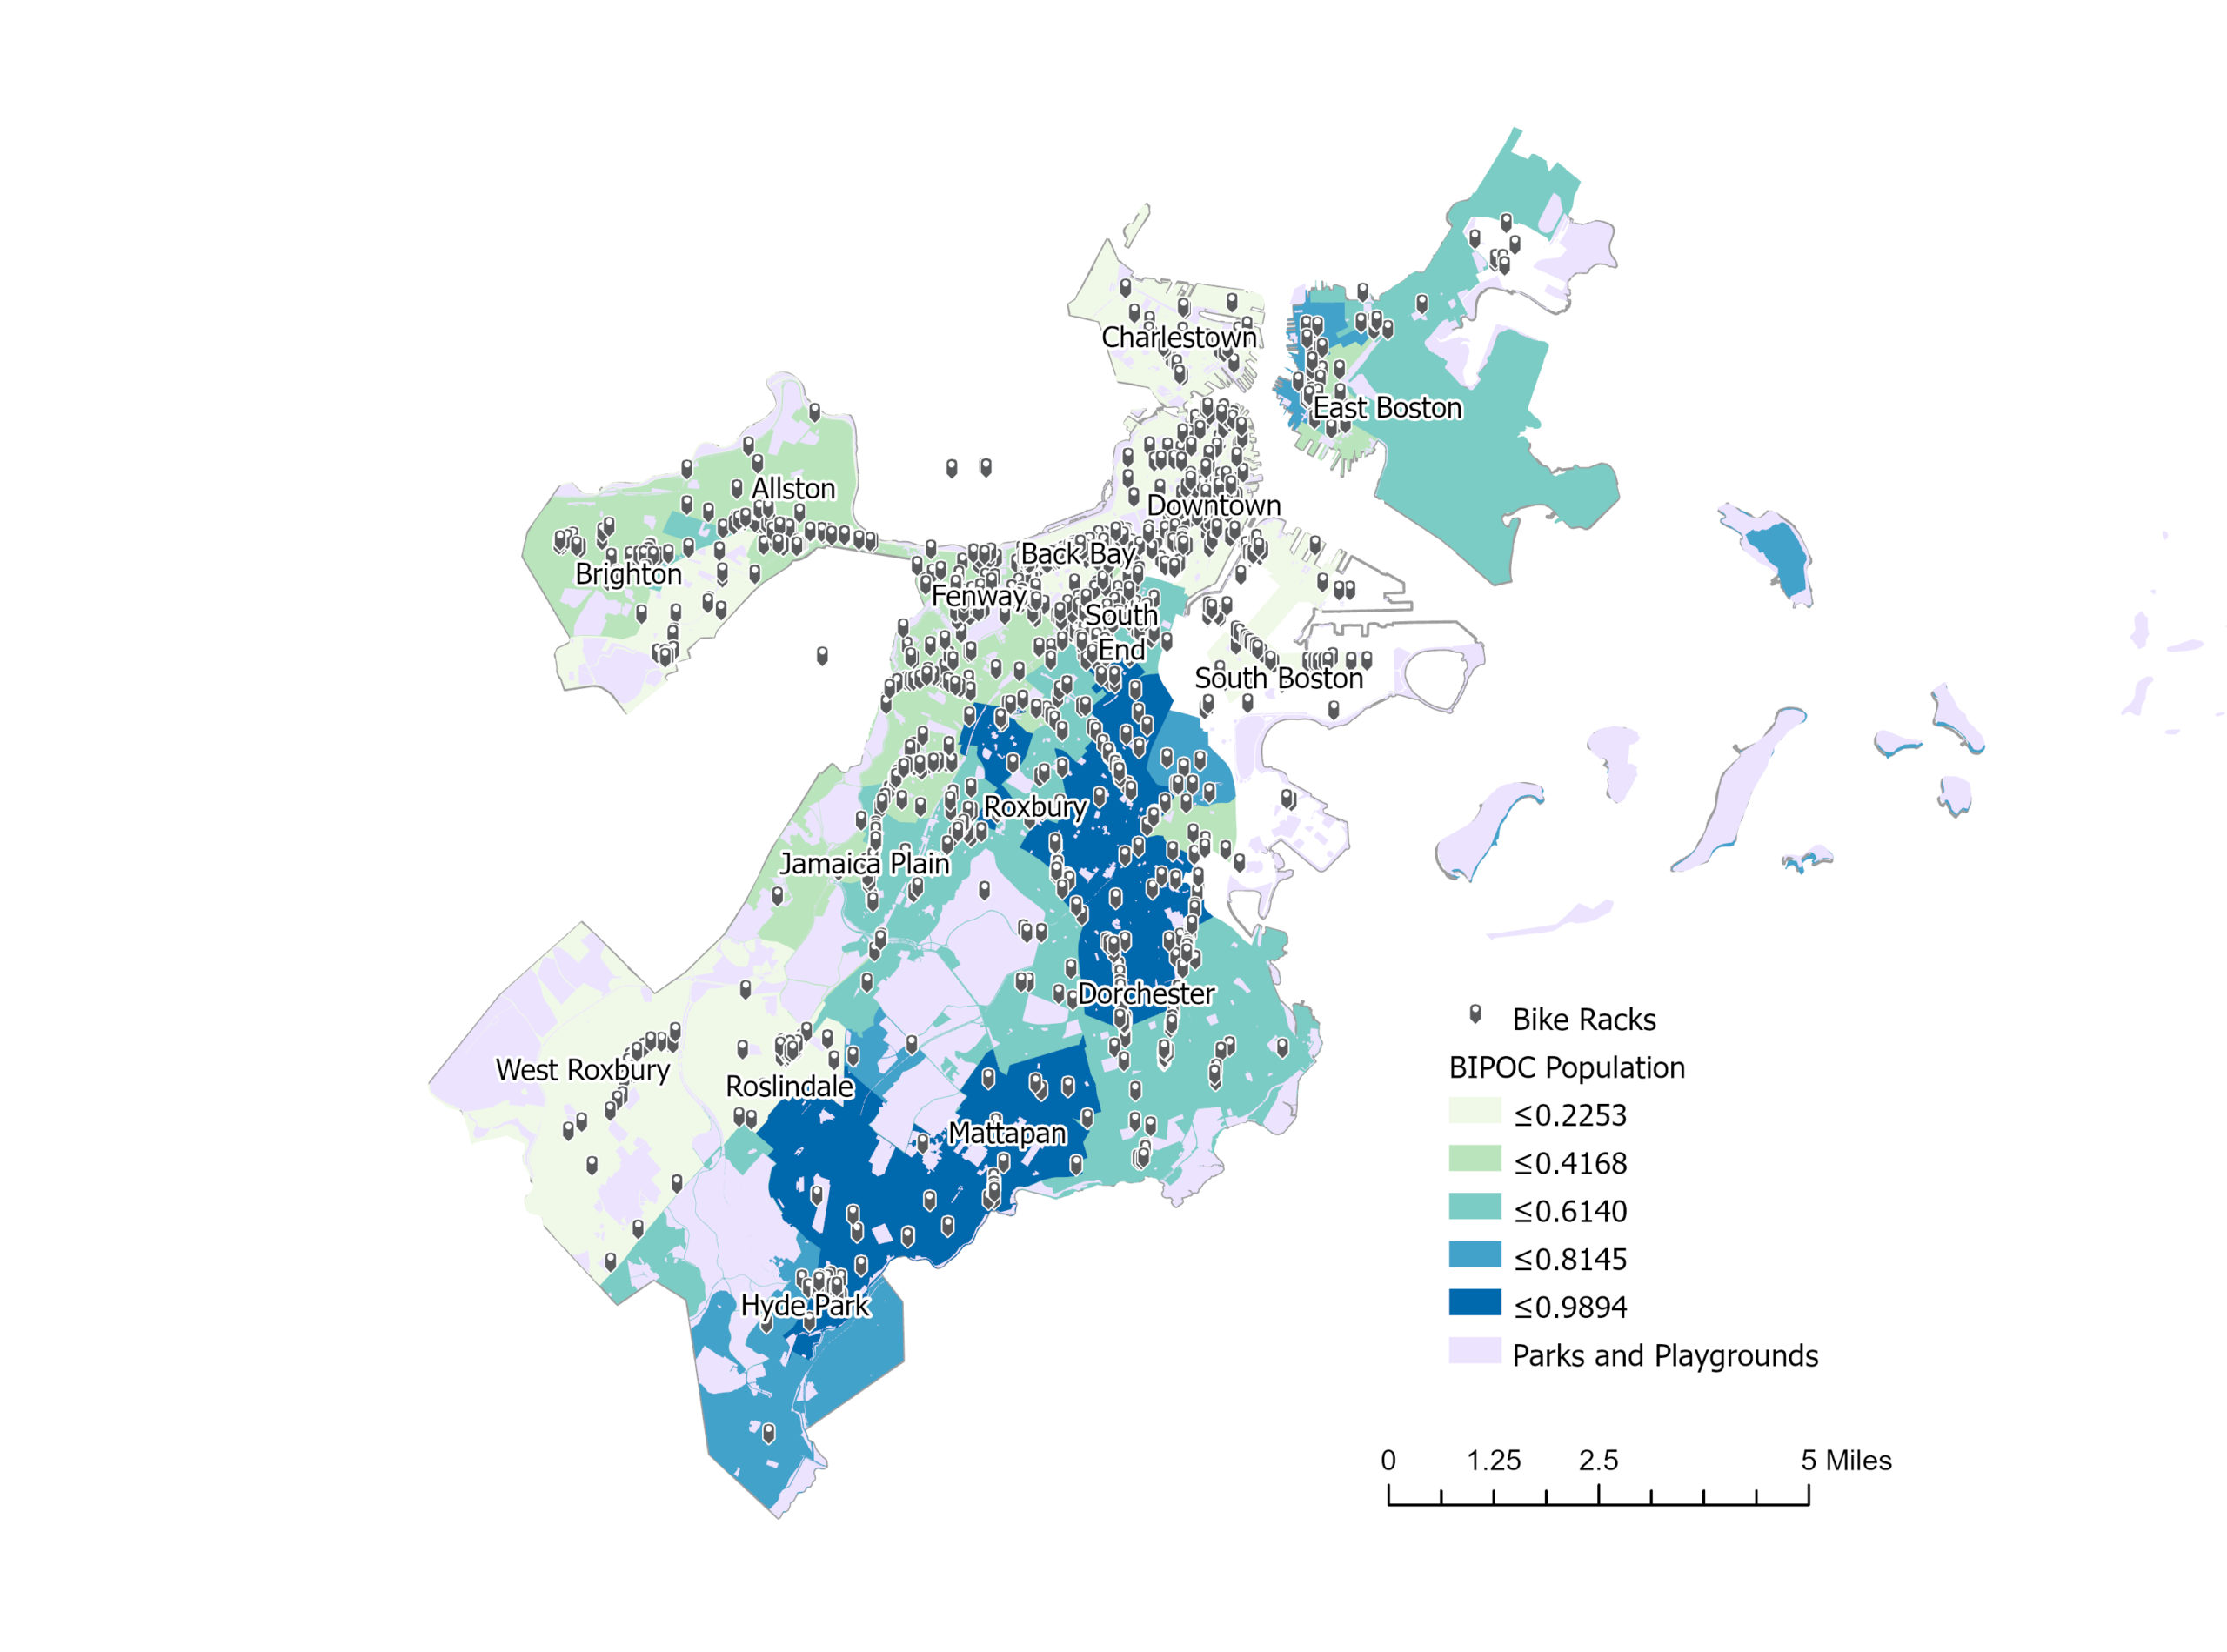 Bike racks mapped against BIPOC population